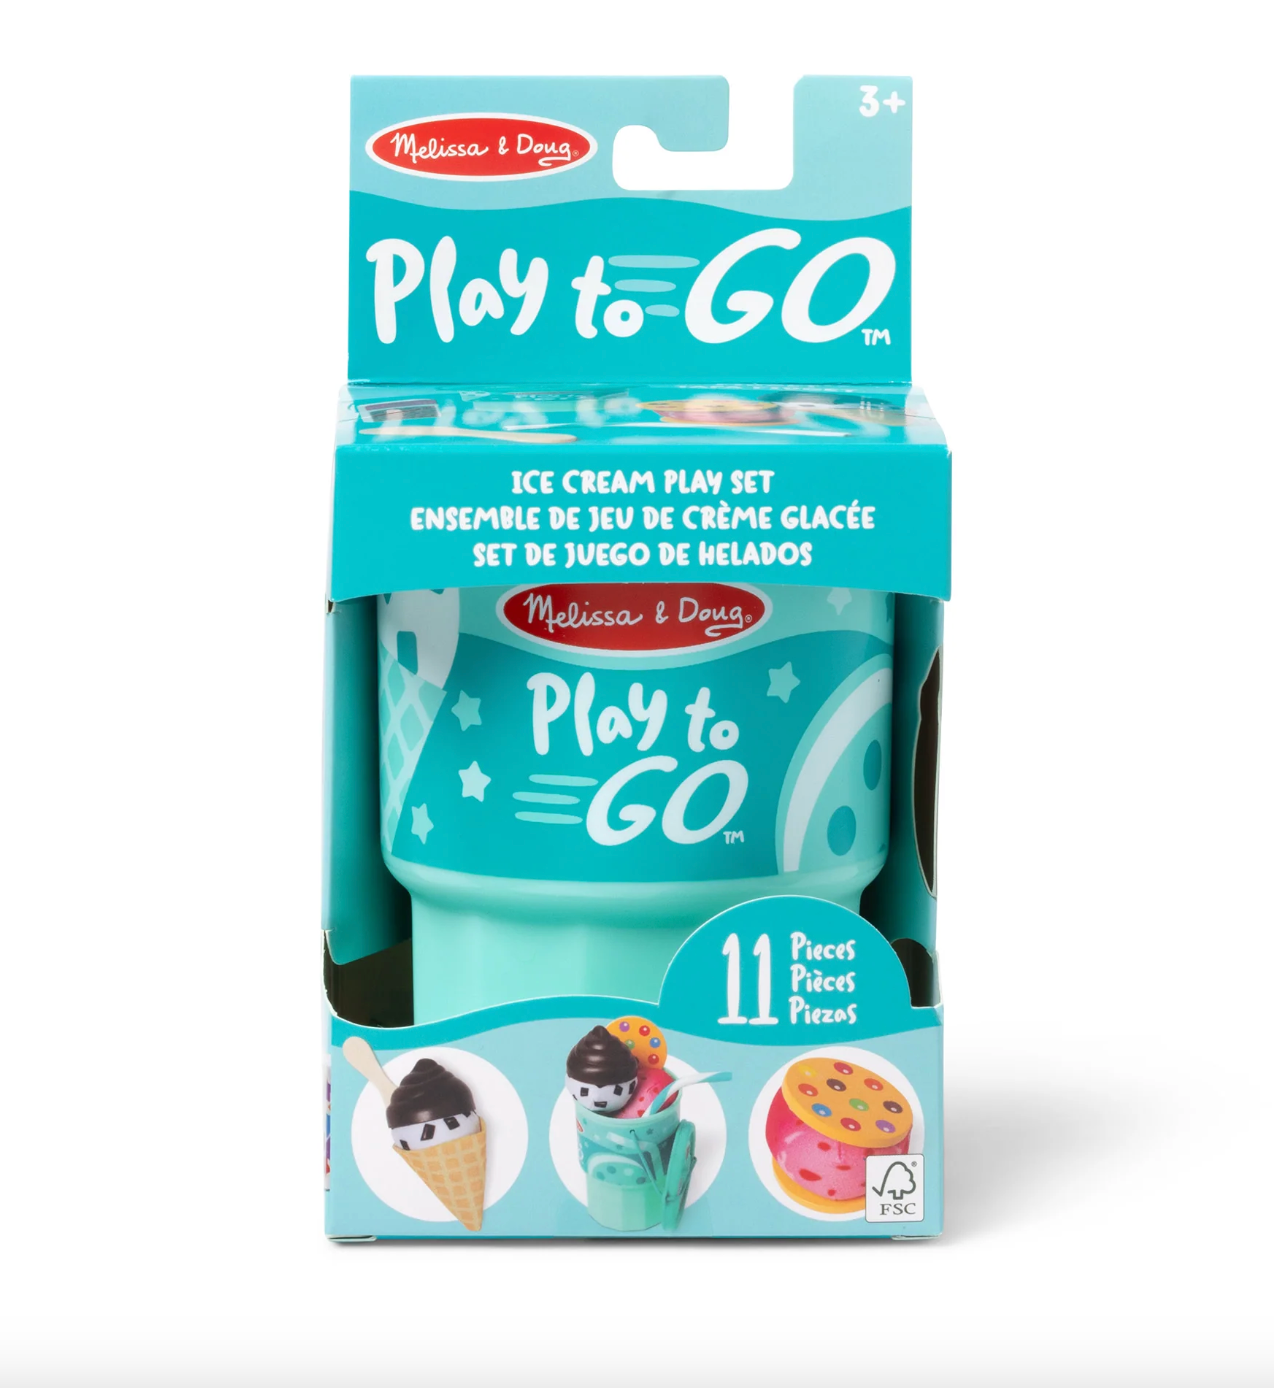 Play to Go: Ice Cream Play Set